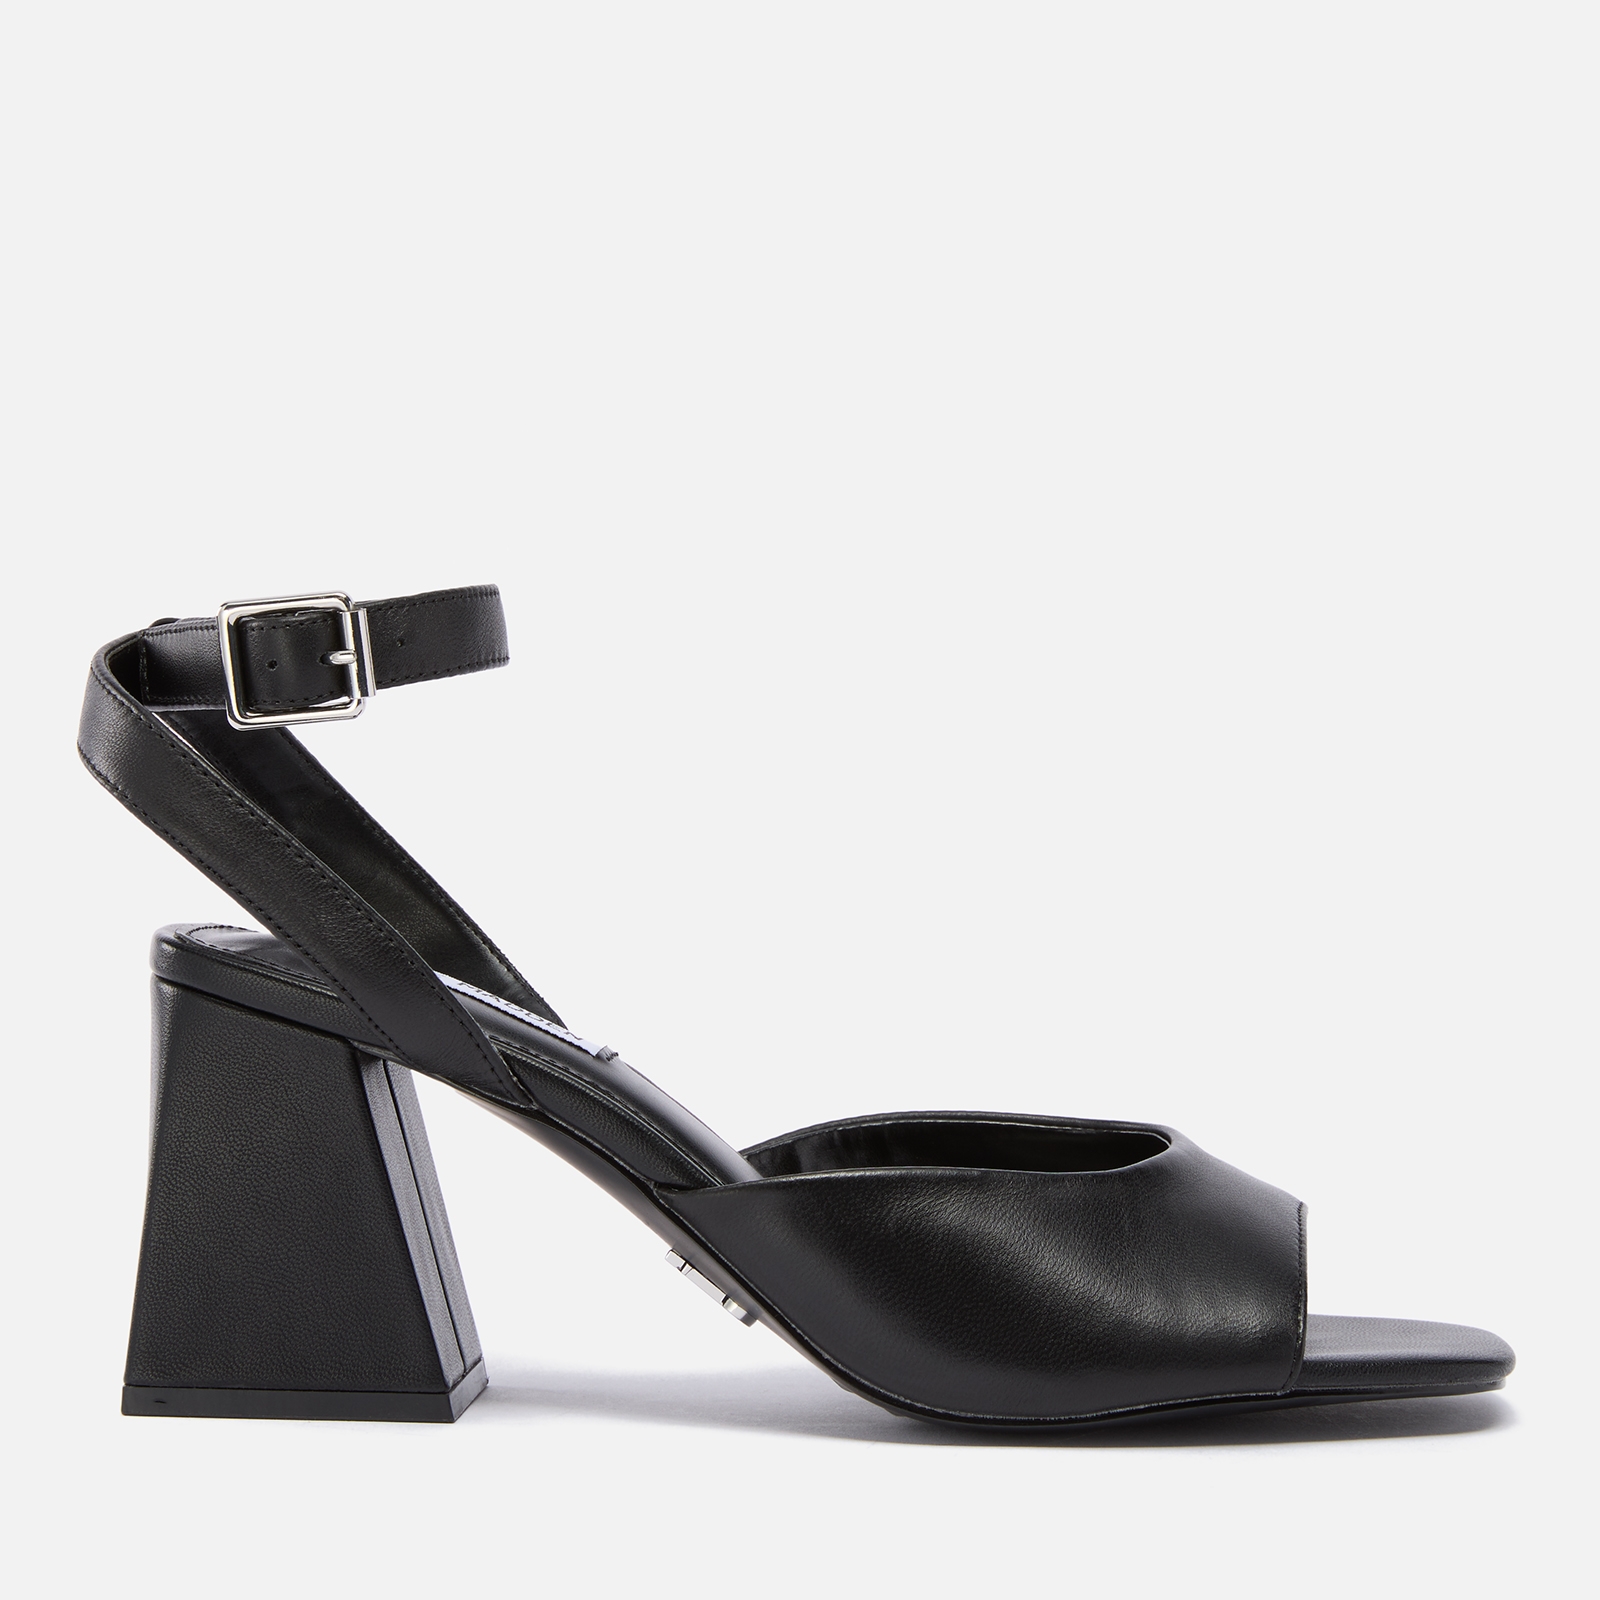 Steve Madden Women’s Glisten Leather Heeled Sandals